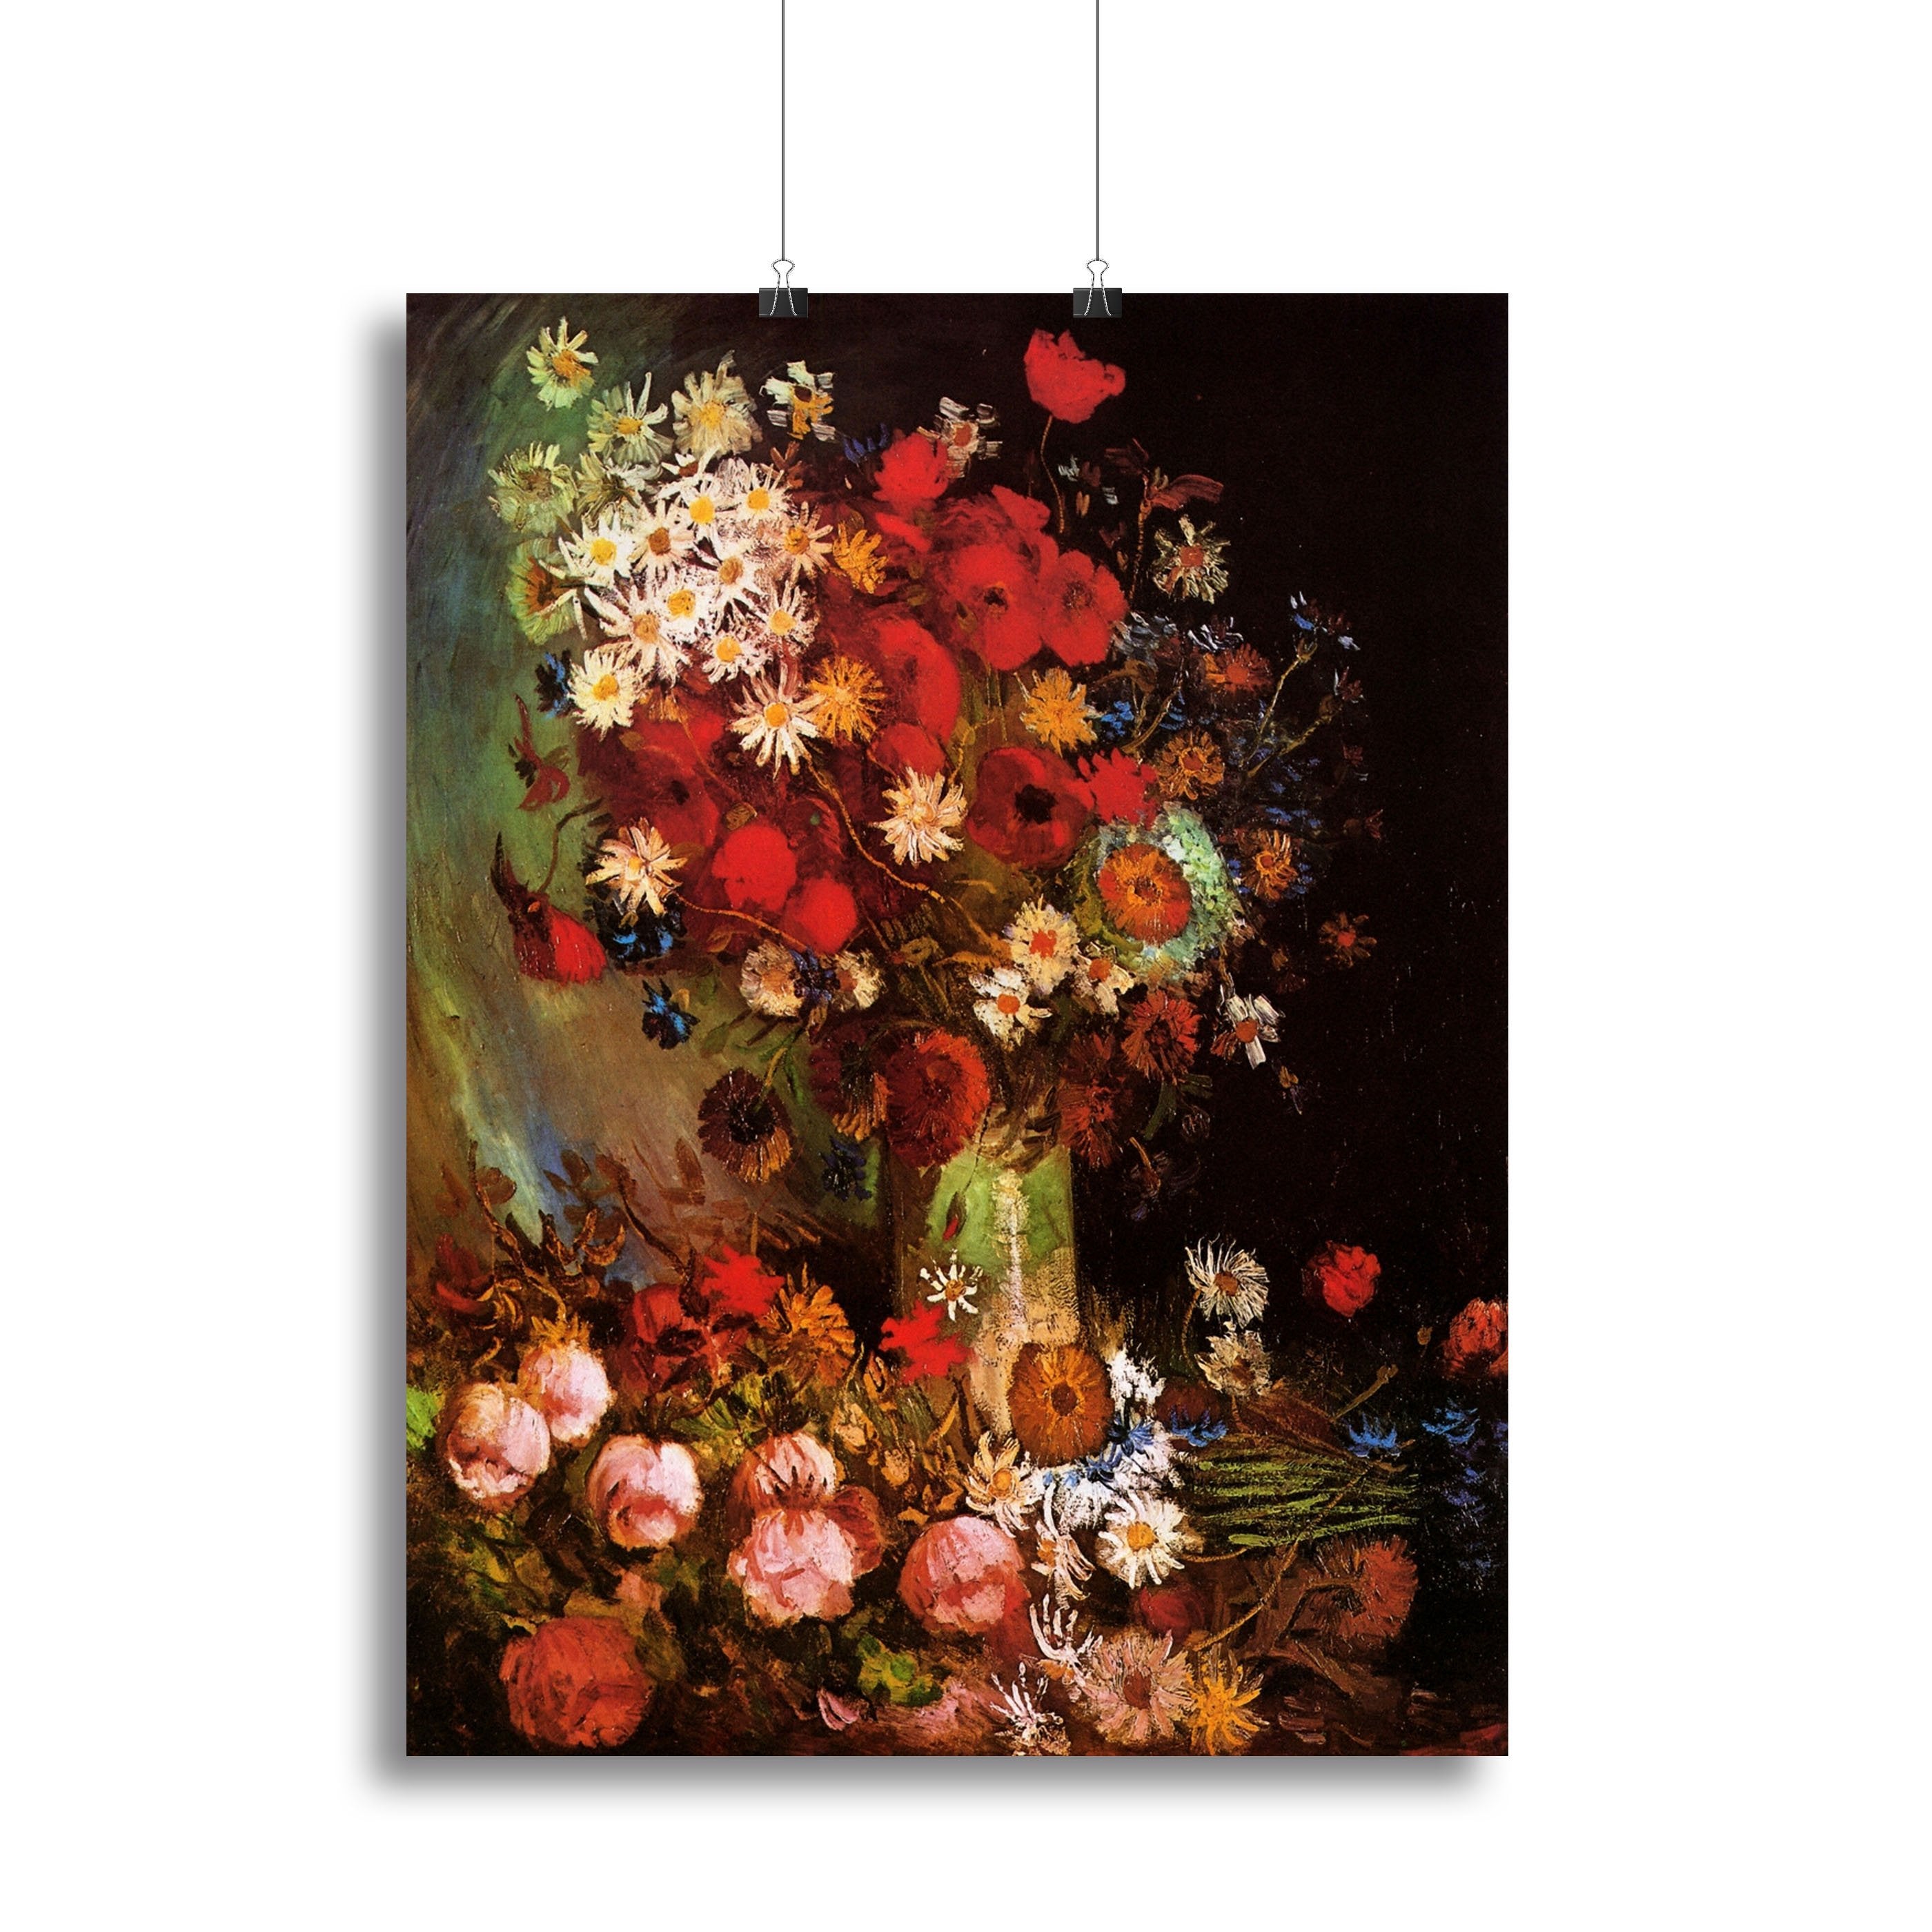 Vase with Poppies Cornflowers Peonies and Chrysanthemums by Van Gogh Canvas Print or Poster